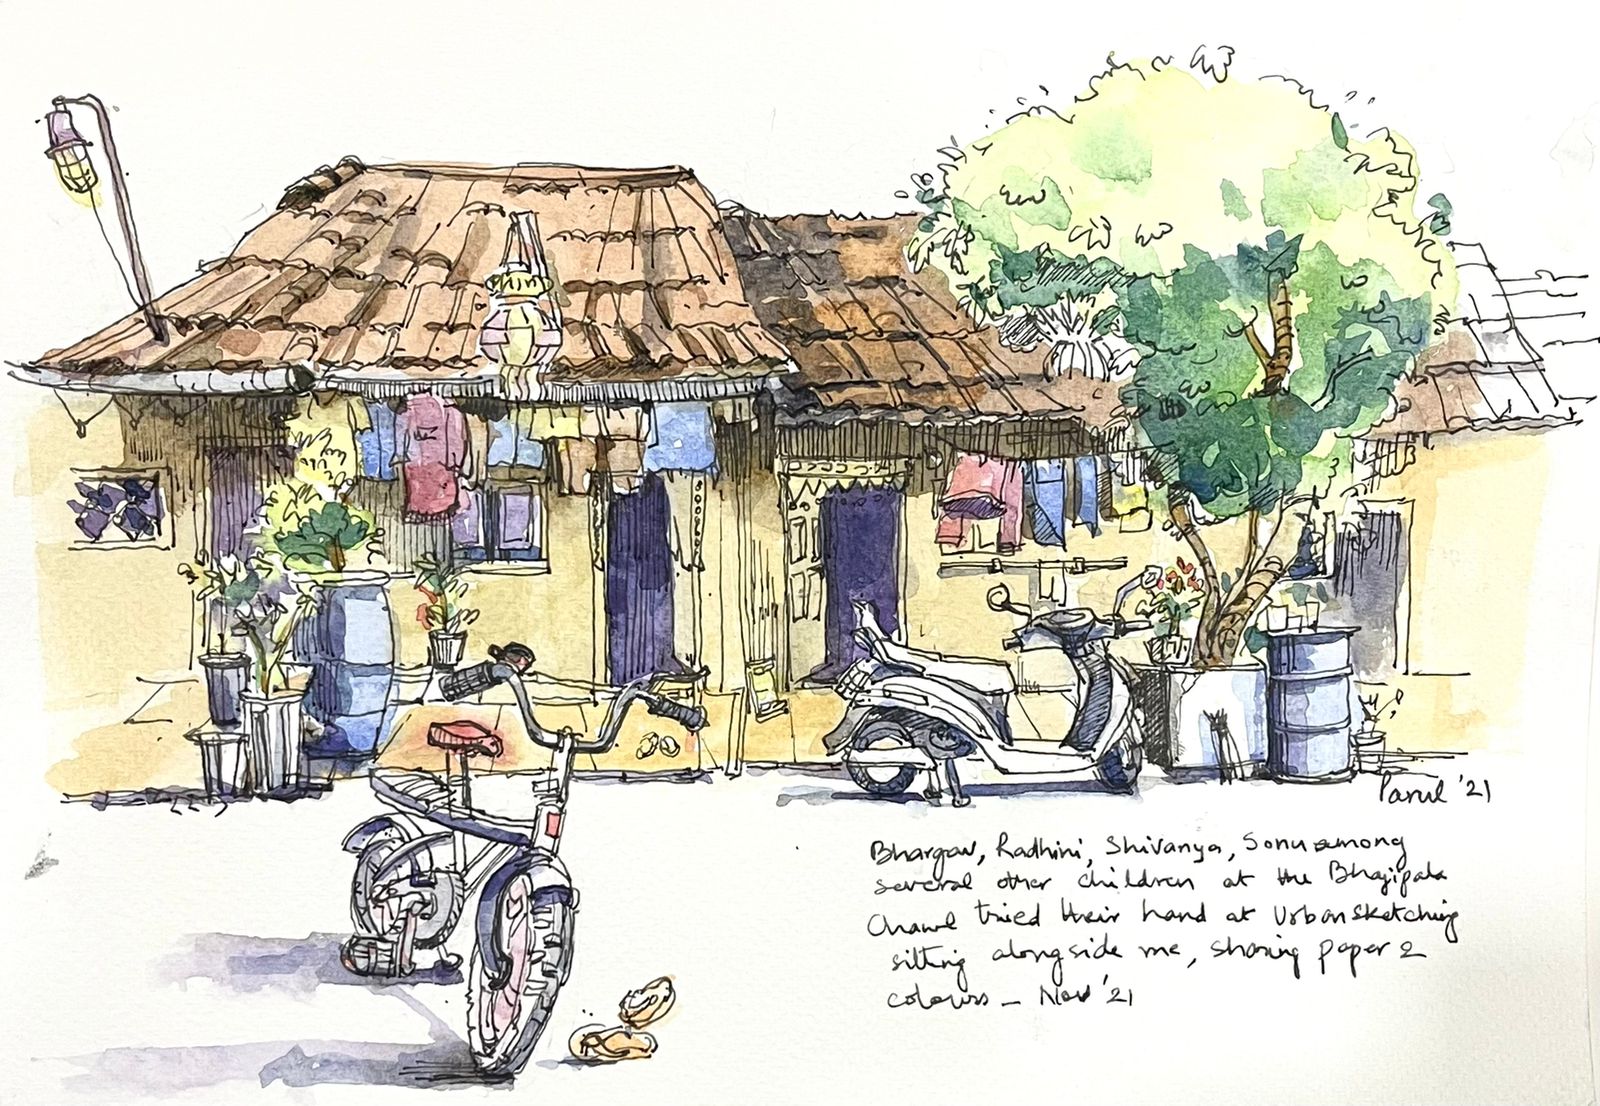 Mumbai | Sketch Away: Travels with my sketchbook